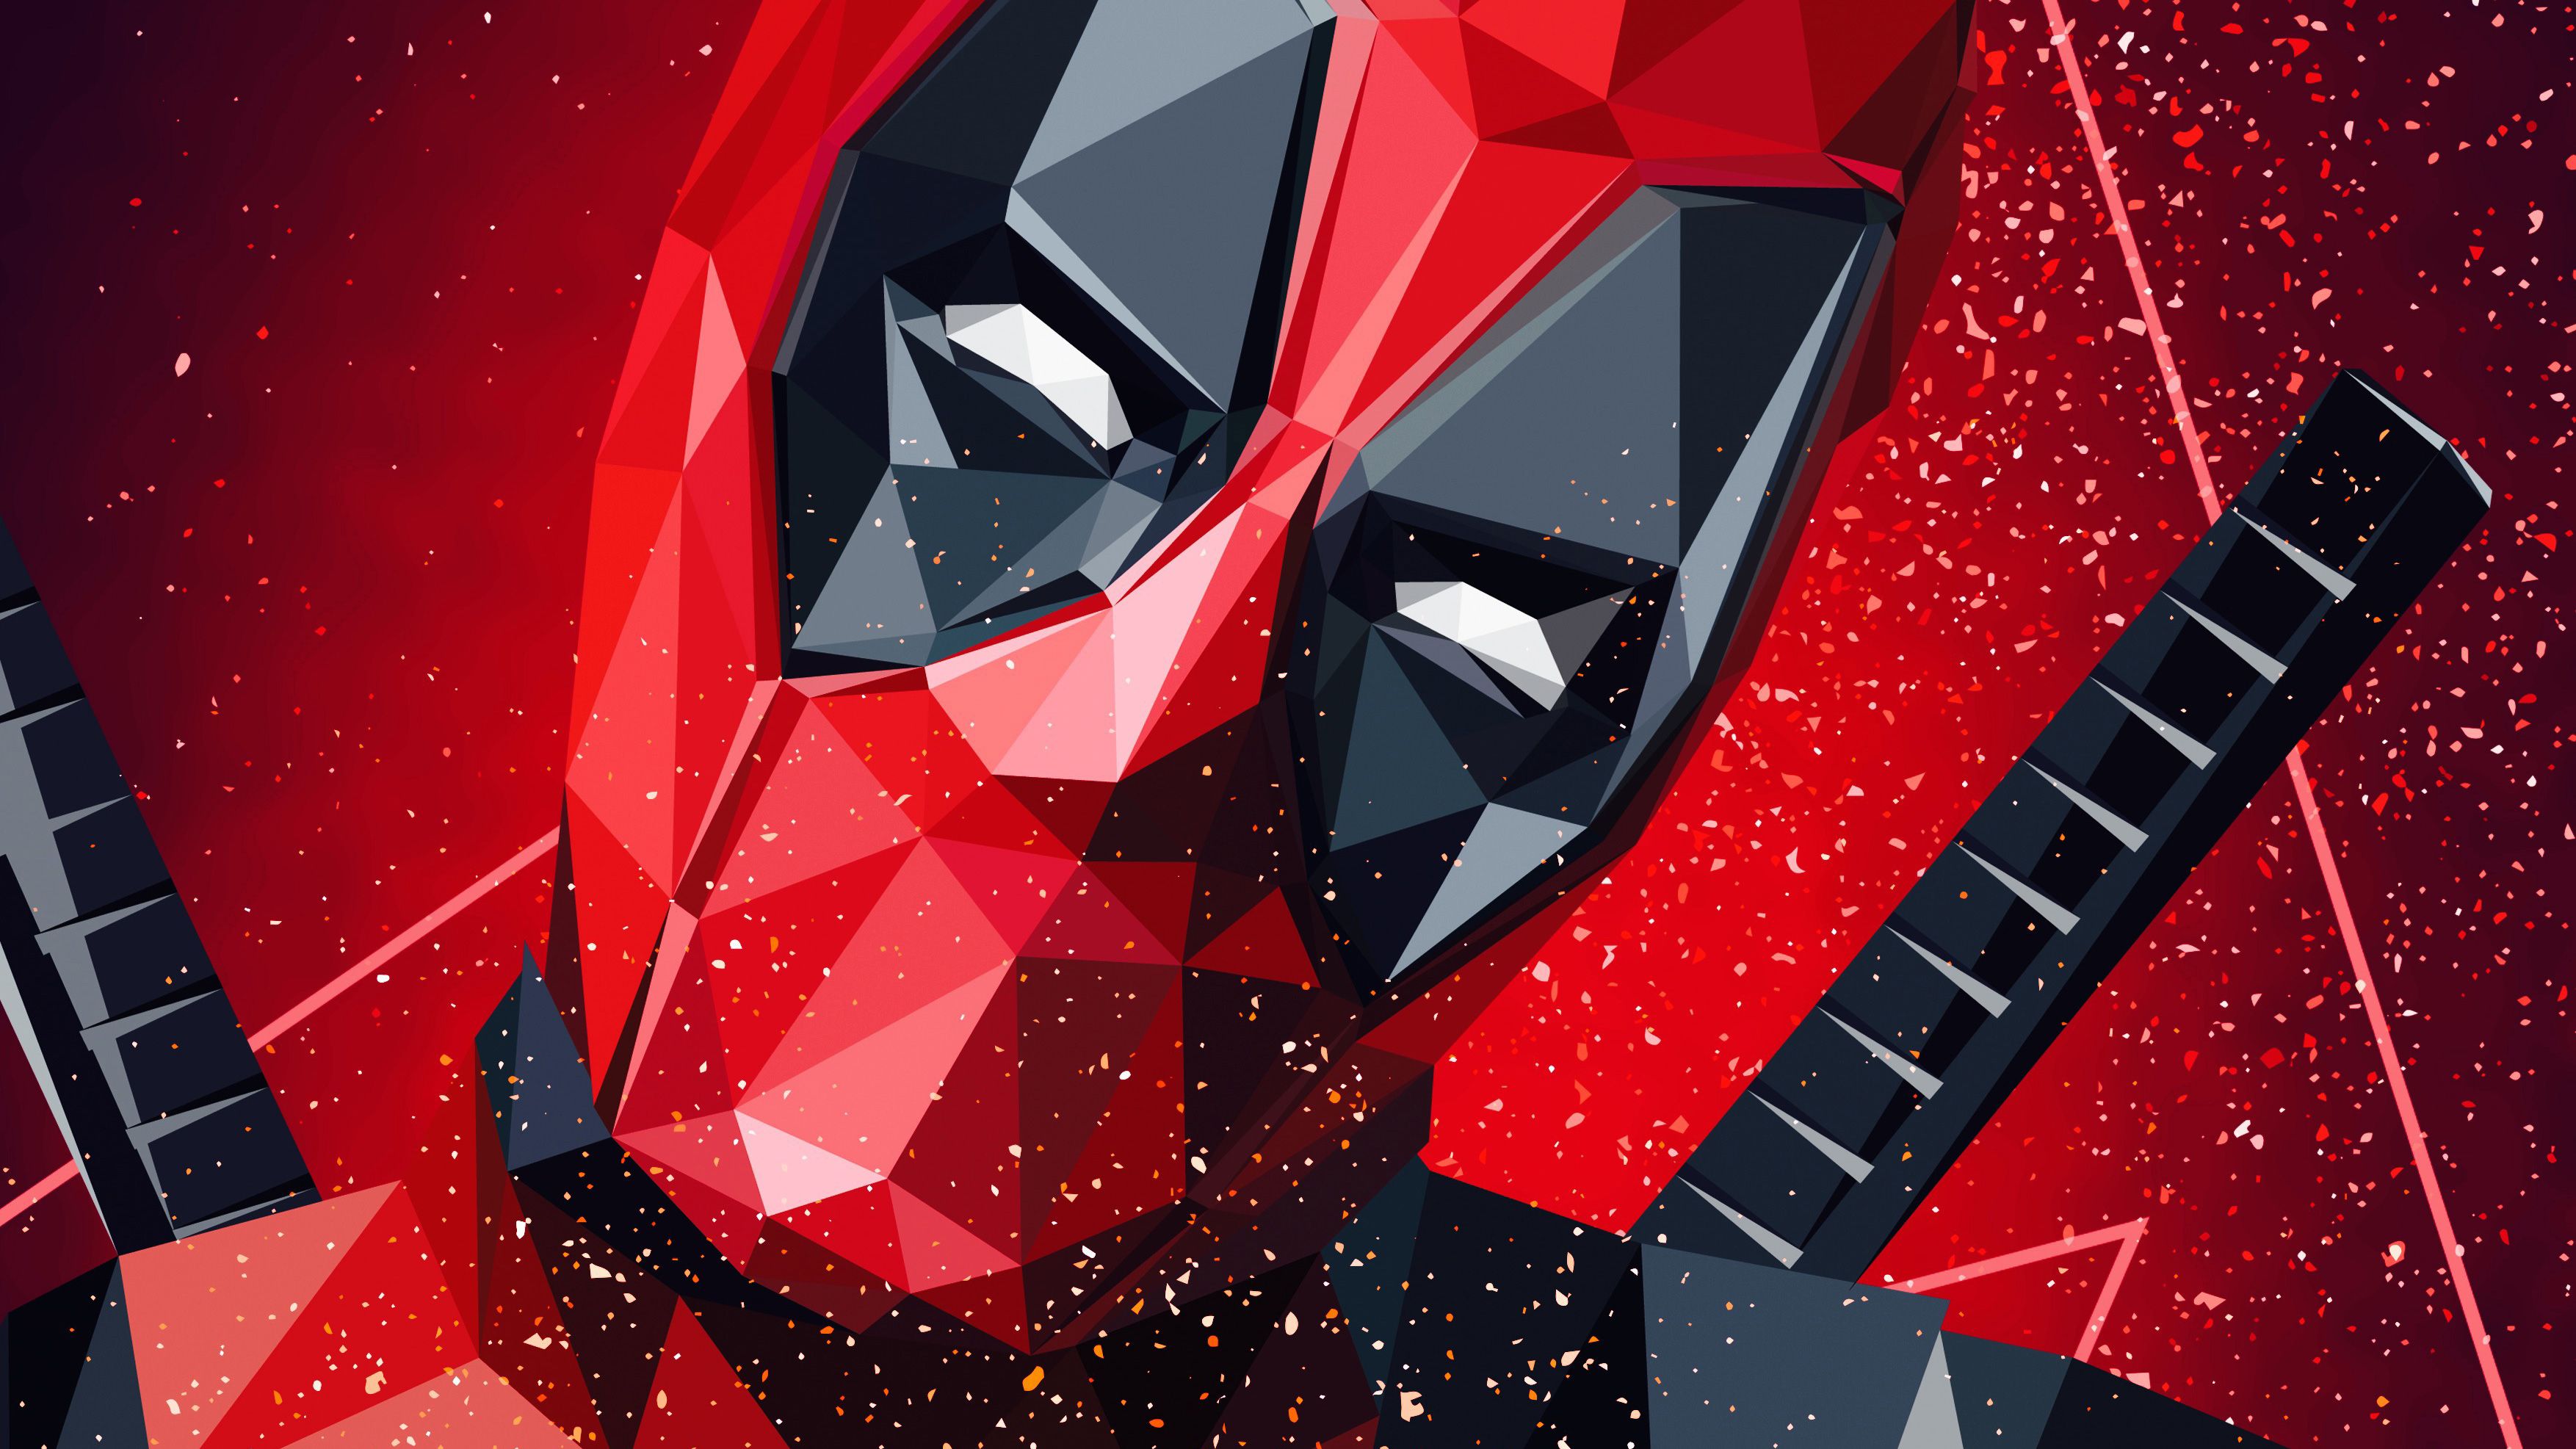 Deadpool Digital Art 4k, HD Superheroes, 4k Wallpaper, Image, Background, Photo and Picture